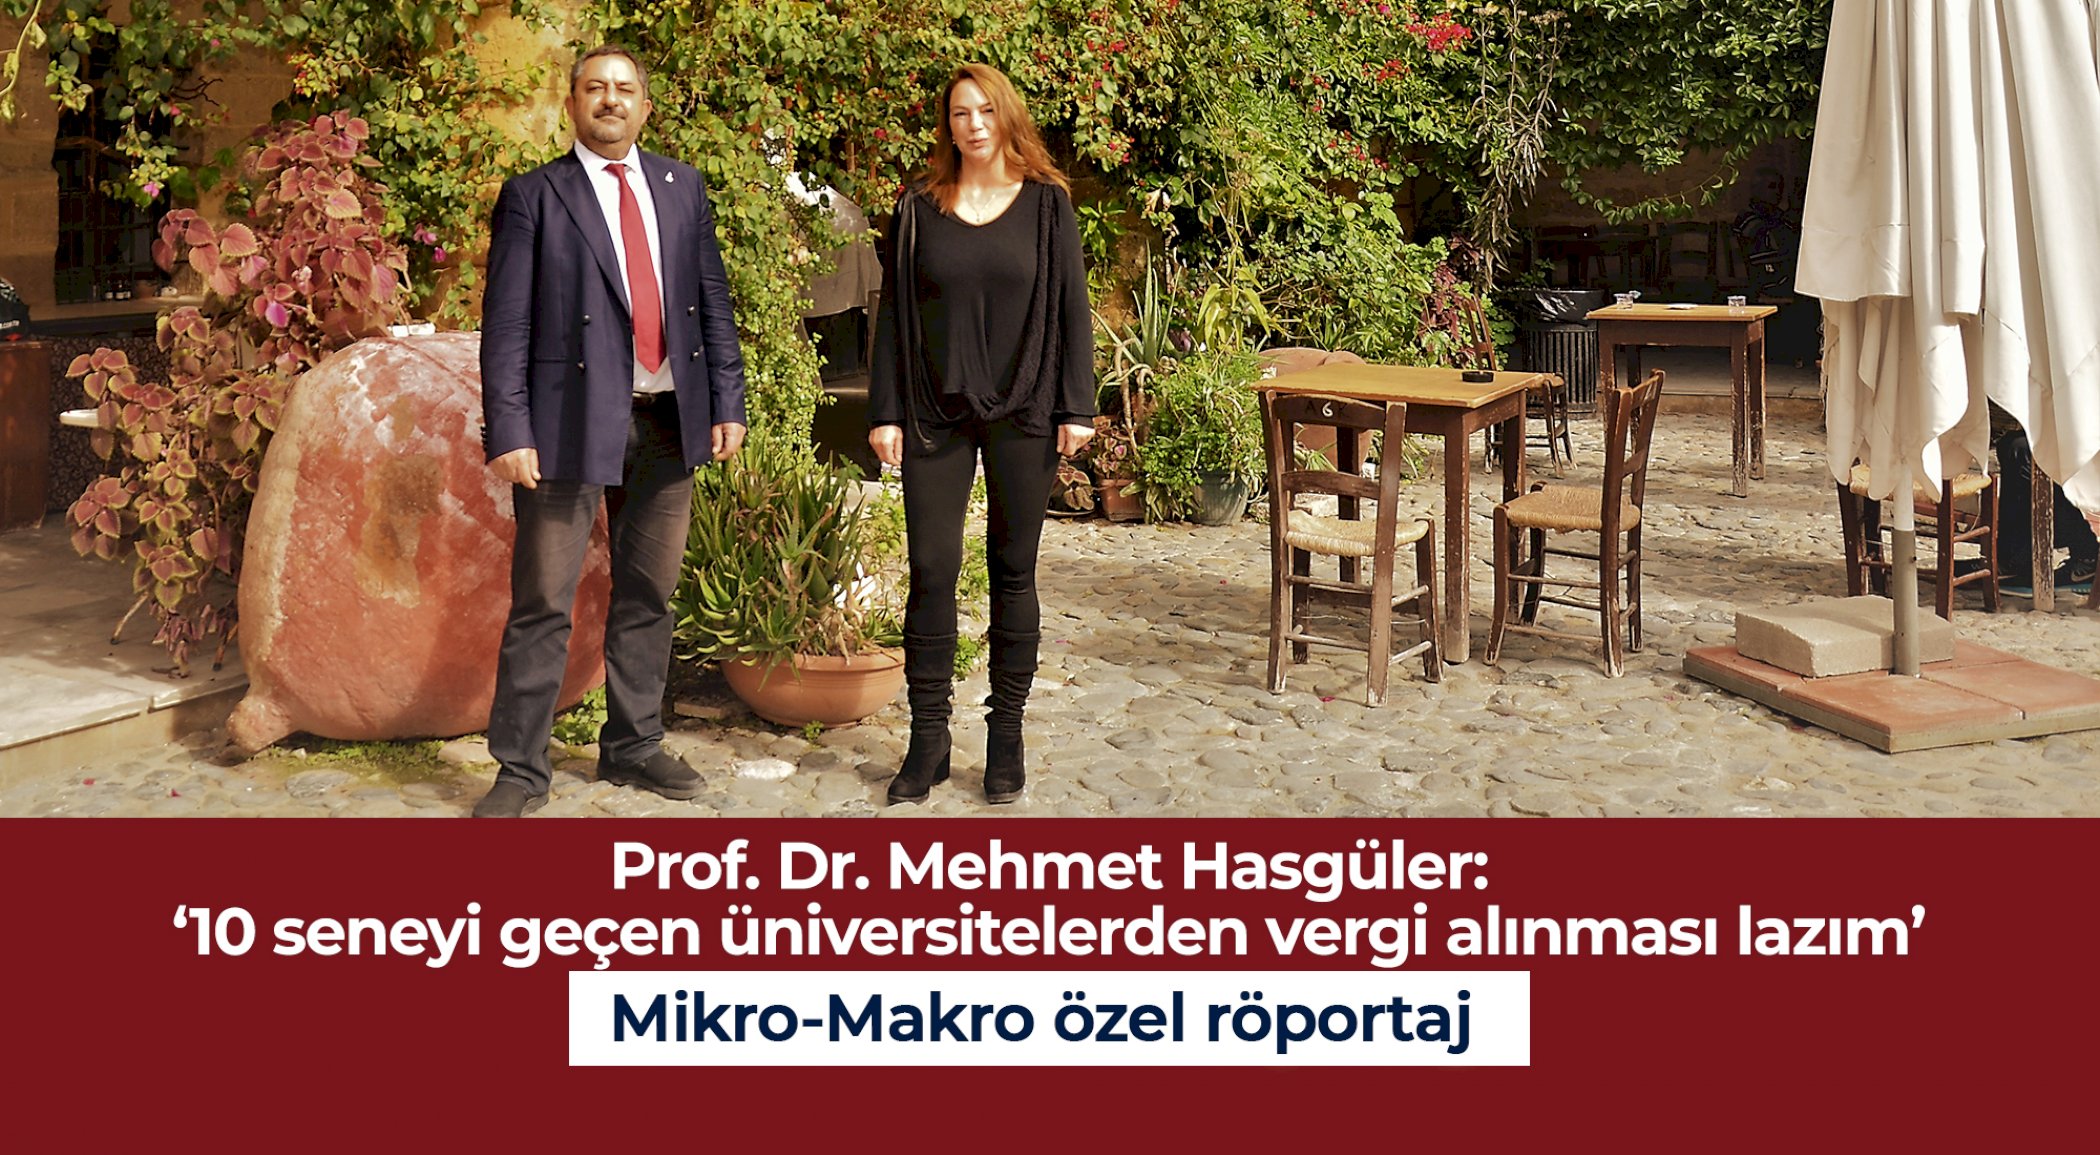 https://www.mikro-makro.net/prof-dr-mehmet-hasguler